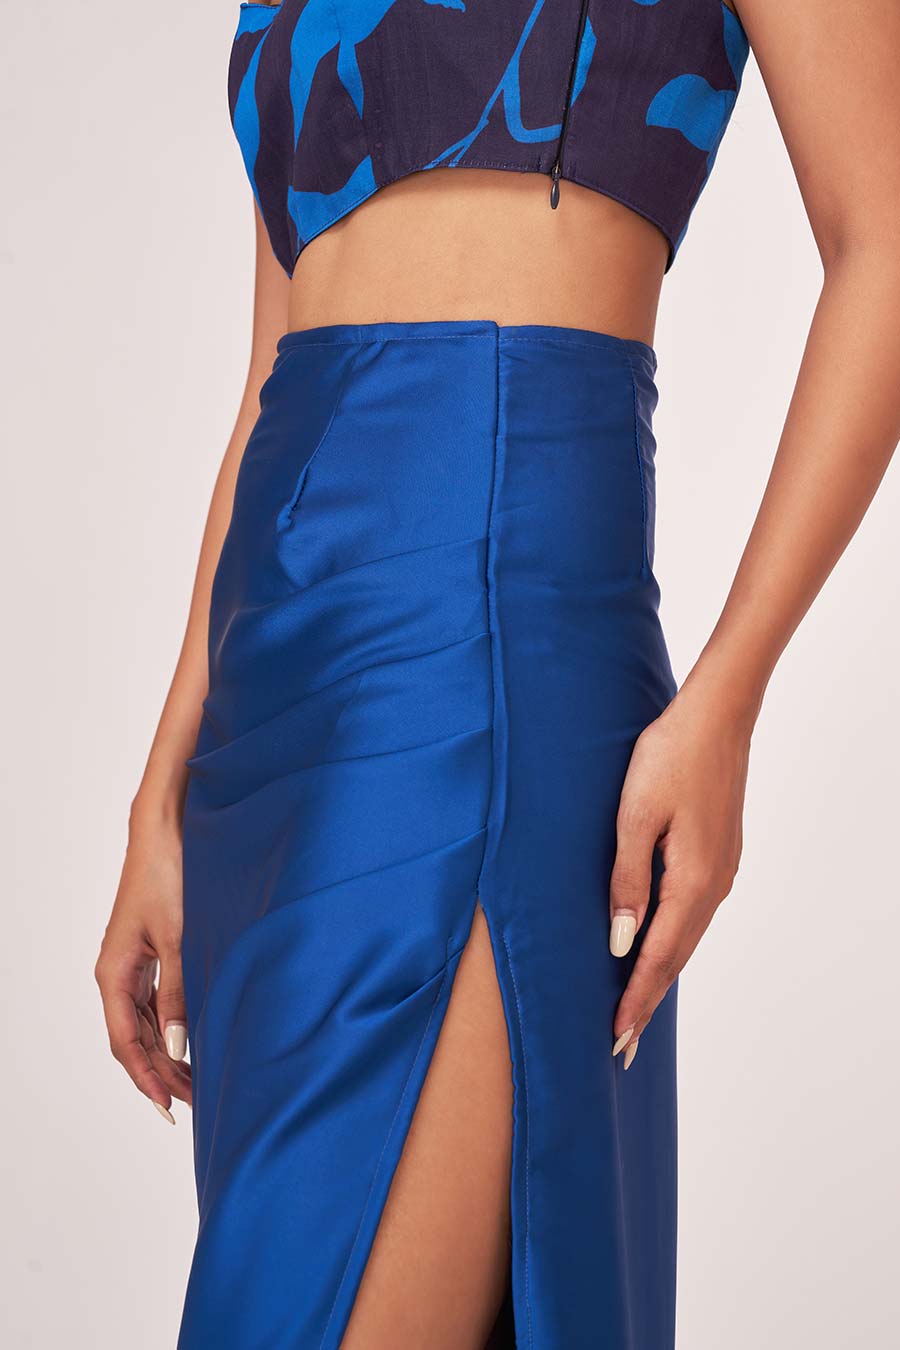 Blue Printed Crop Top & Long Skirt Co-Ord Set